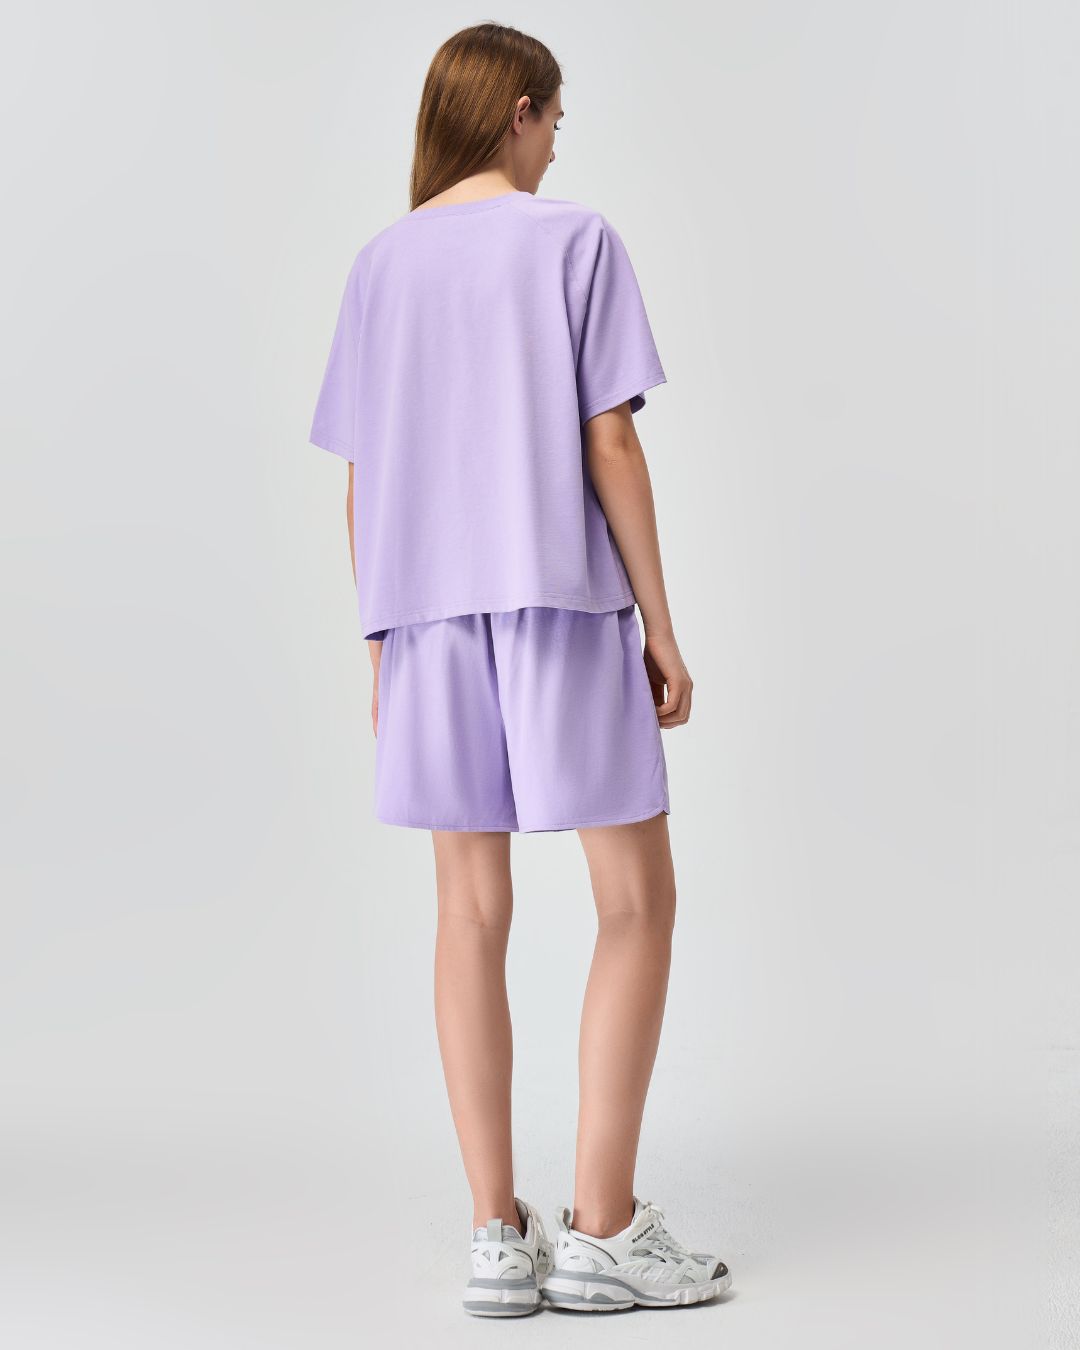 Aster Purple Suit Set(Tee + Shorts)